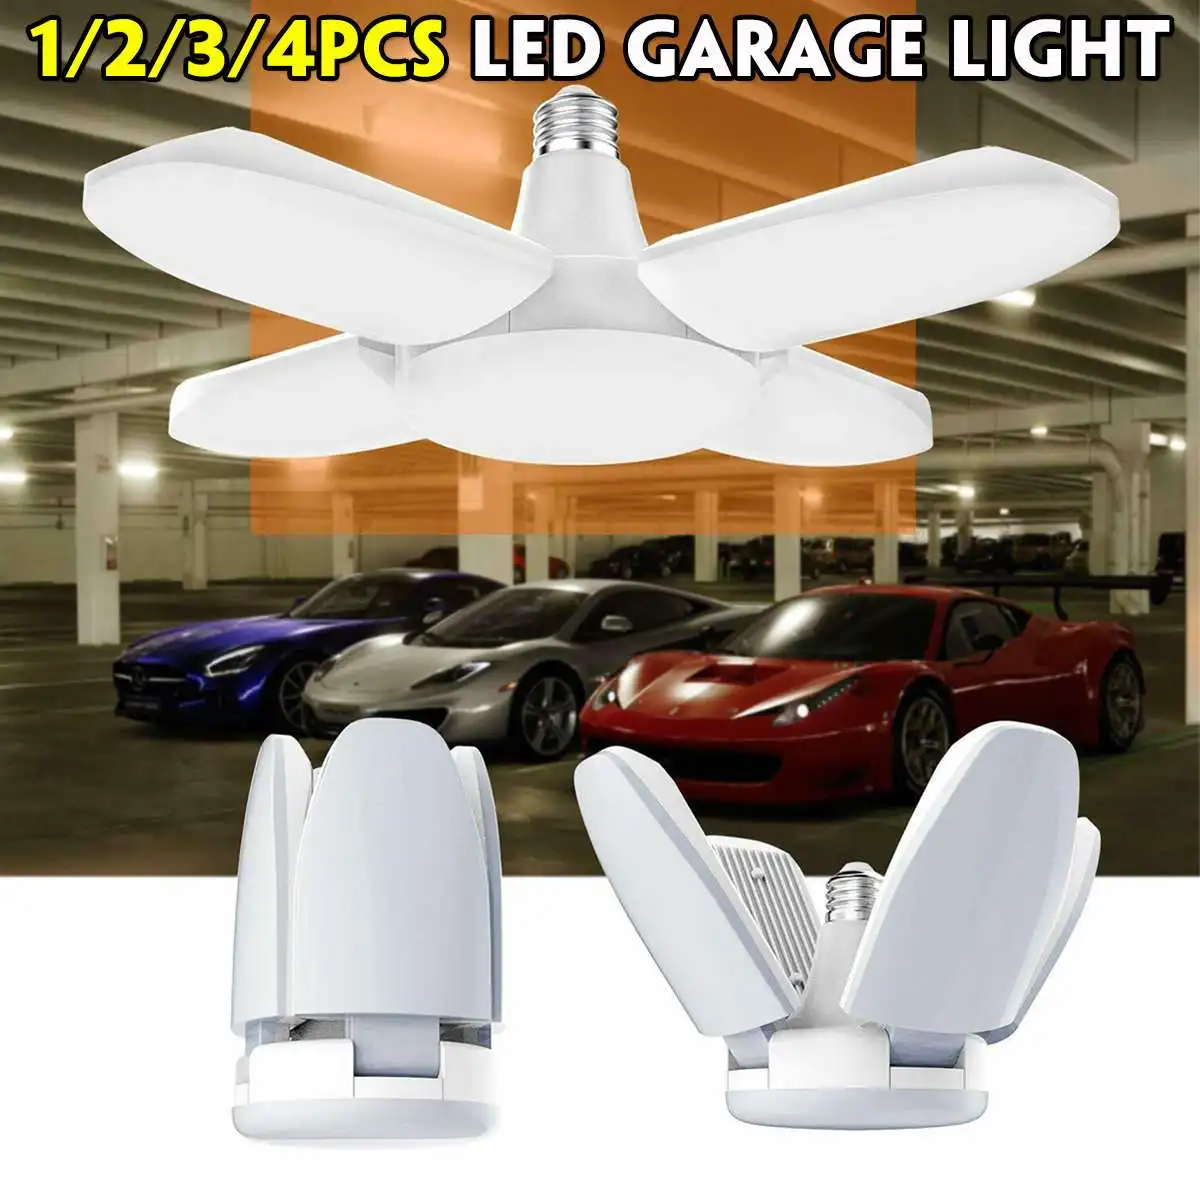 Us 9 95 40 Off 156pcs Led Deformable Garage Light 60w E27 85 265v 5600lm Ceiling Light For Garage Attic Basement Home Led Lamp In Industrial